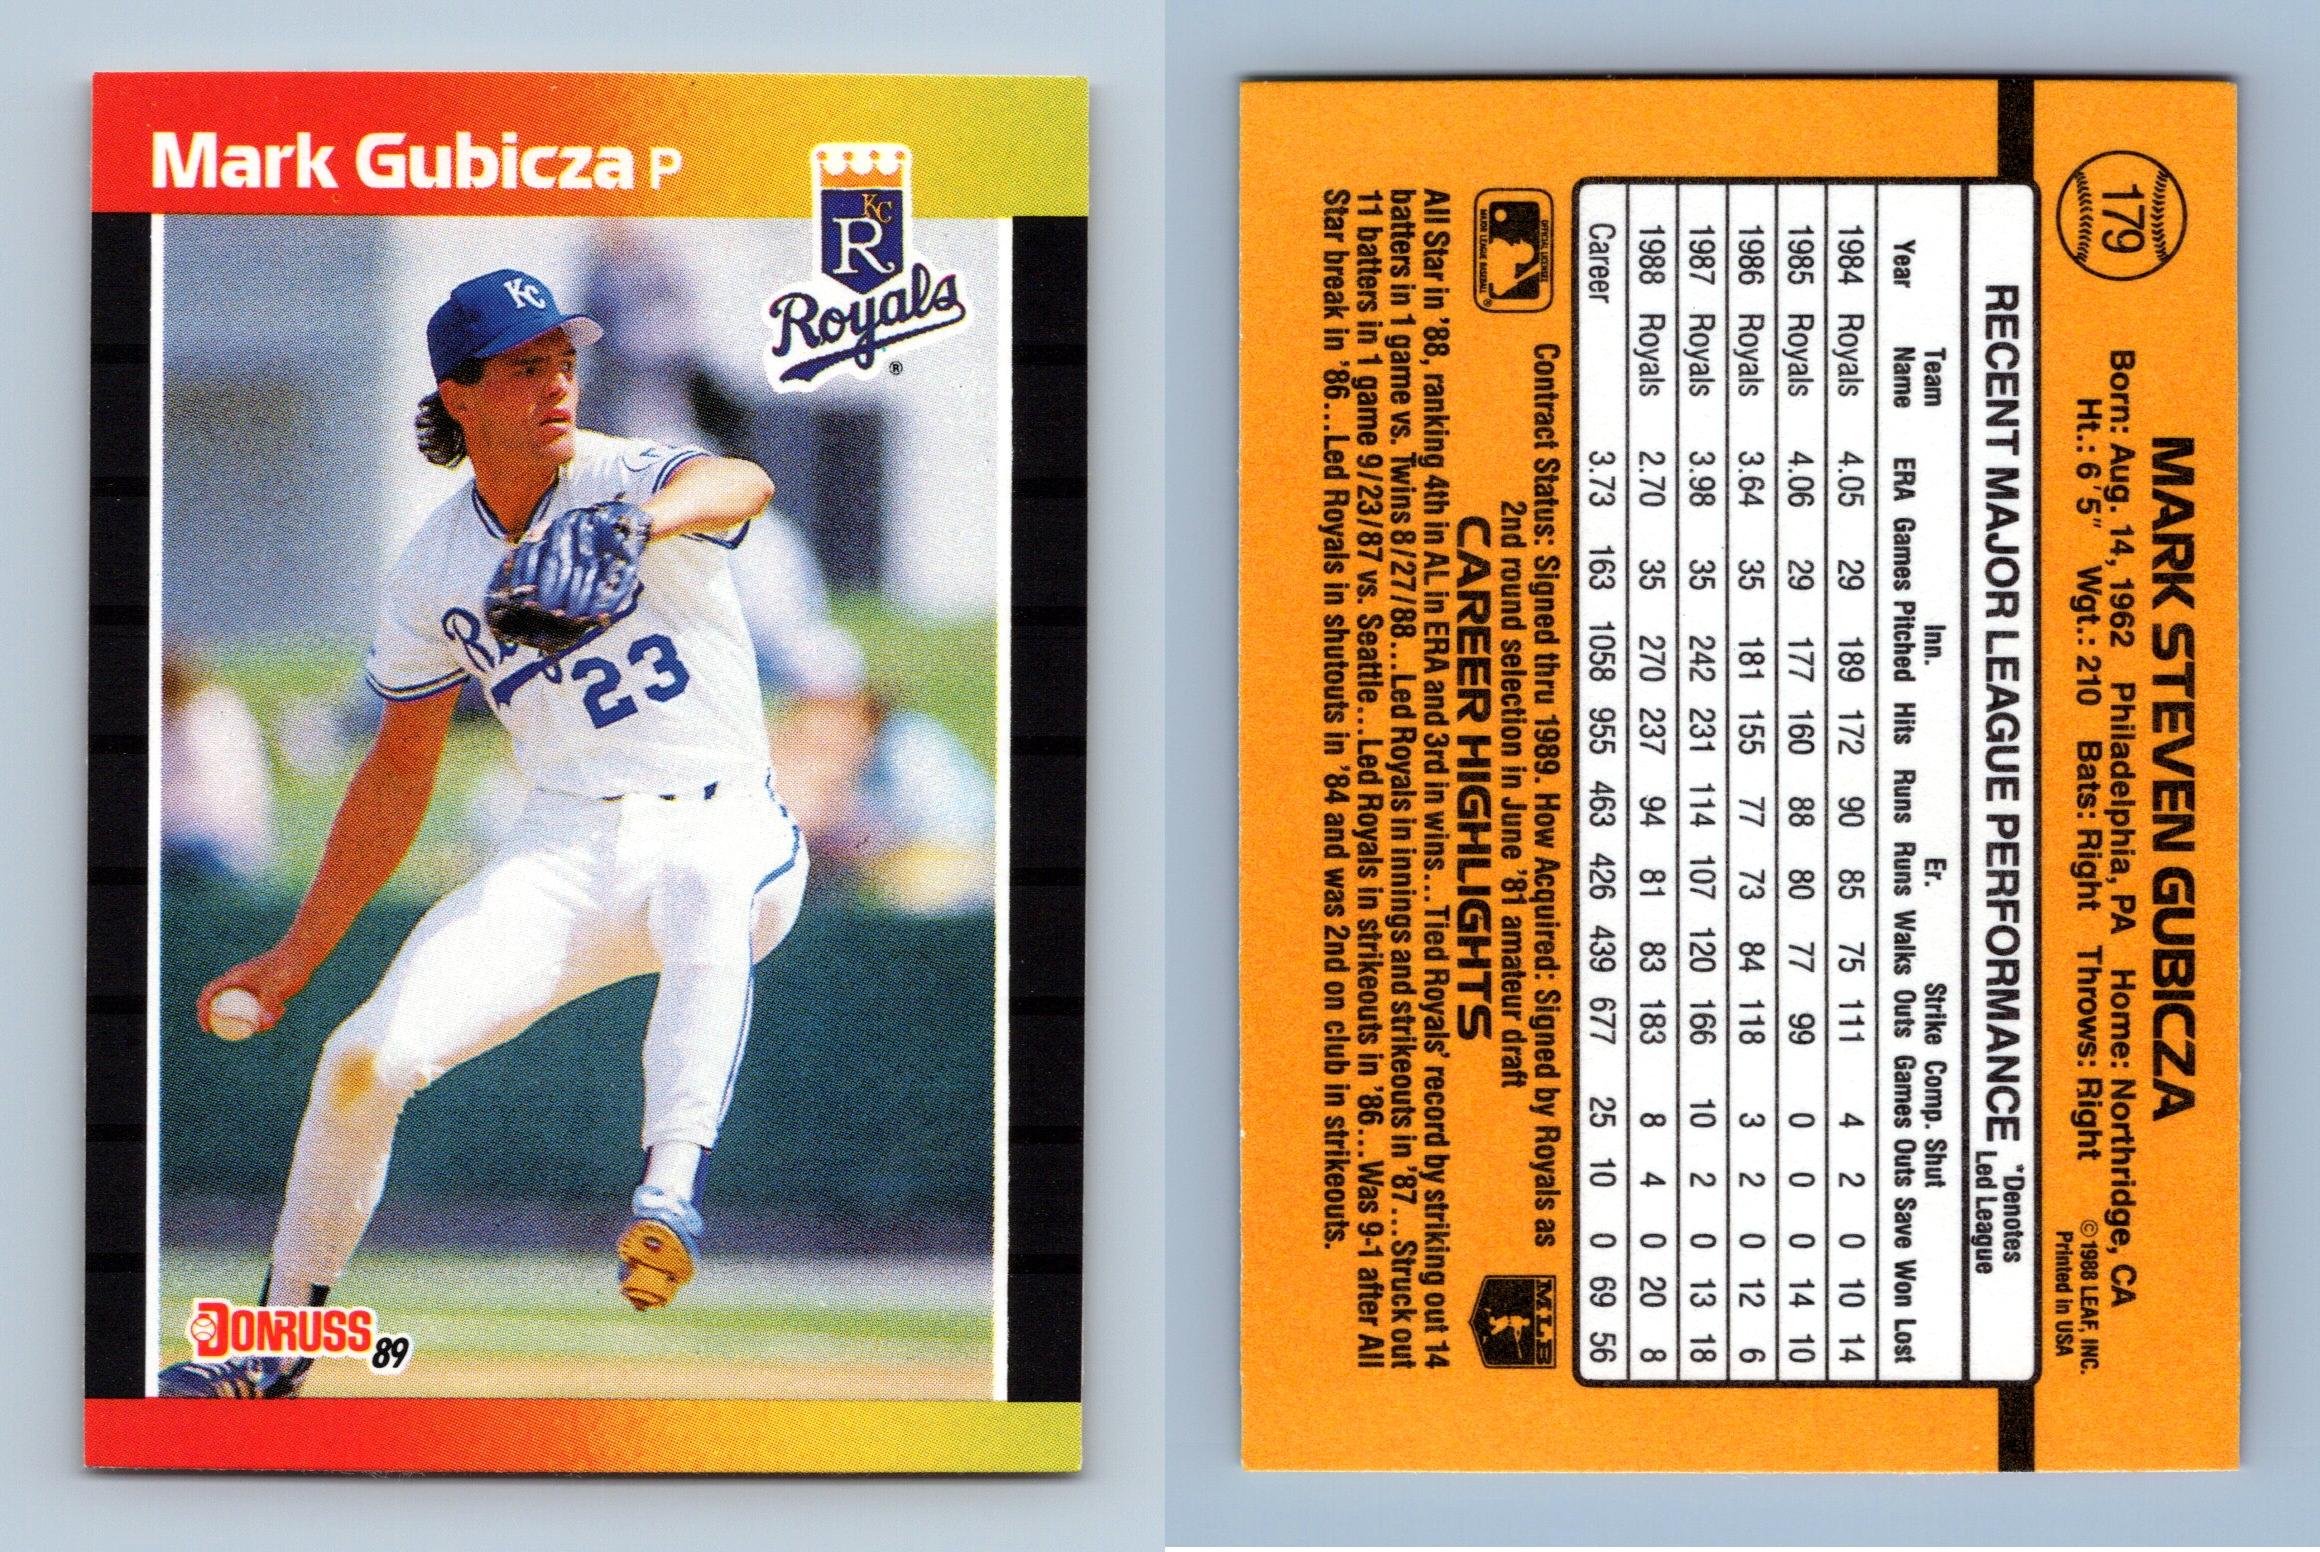 Jody Davis - Braves #650 Donruss 1989 Baseball Trading Card